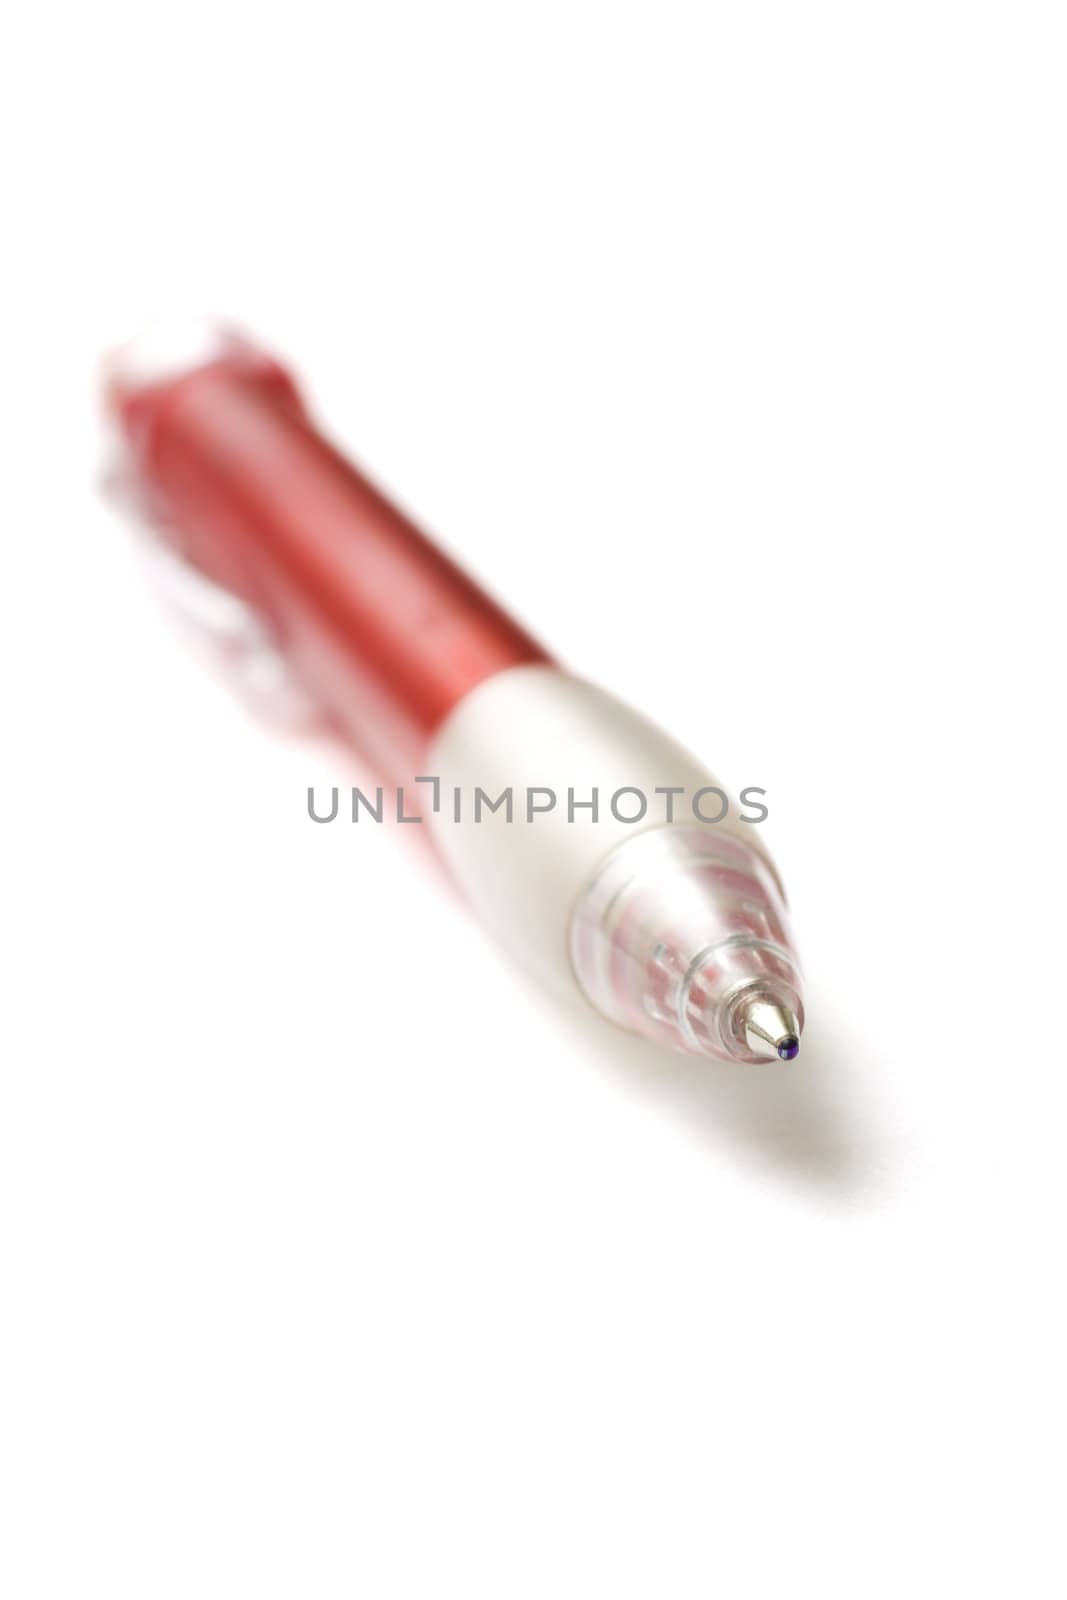 red pen by ctacik